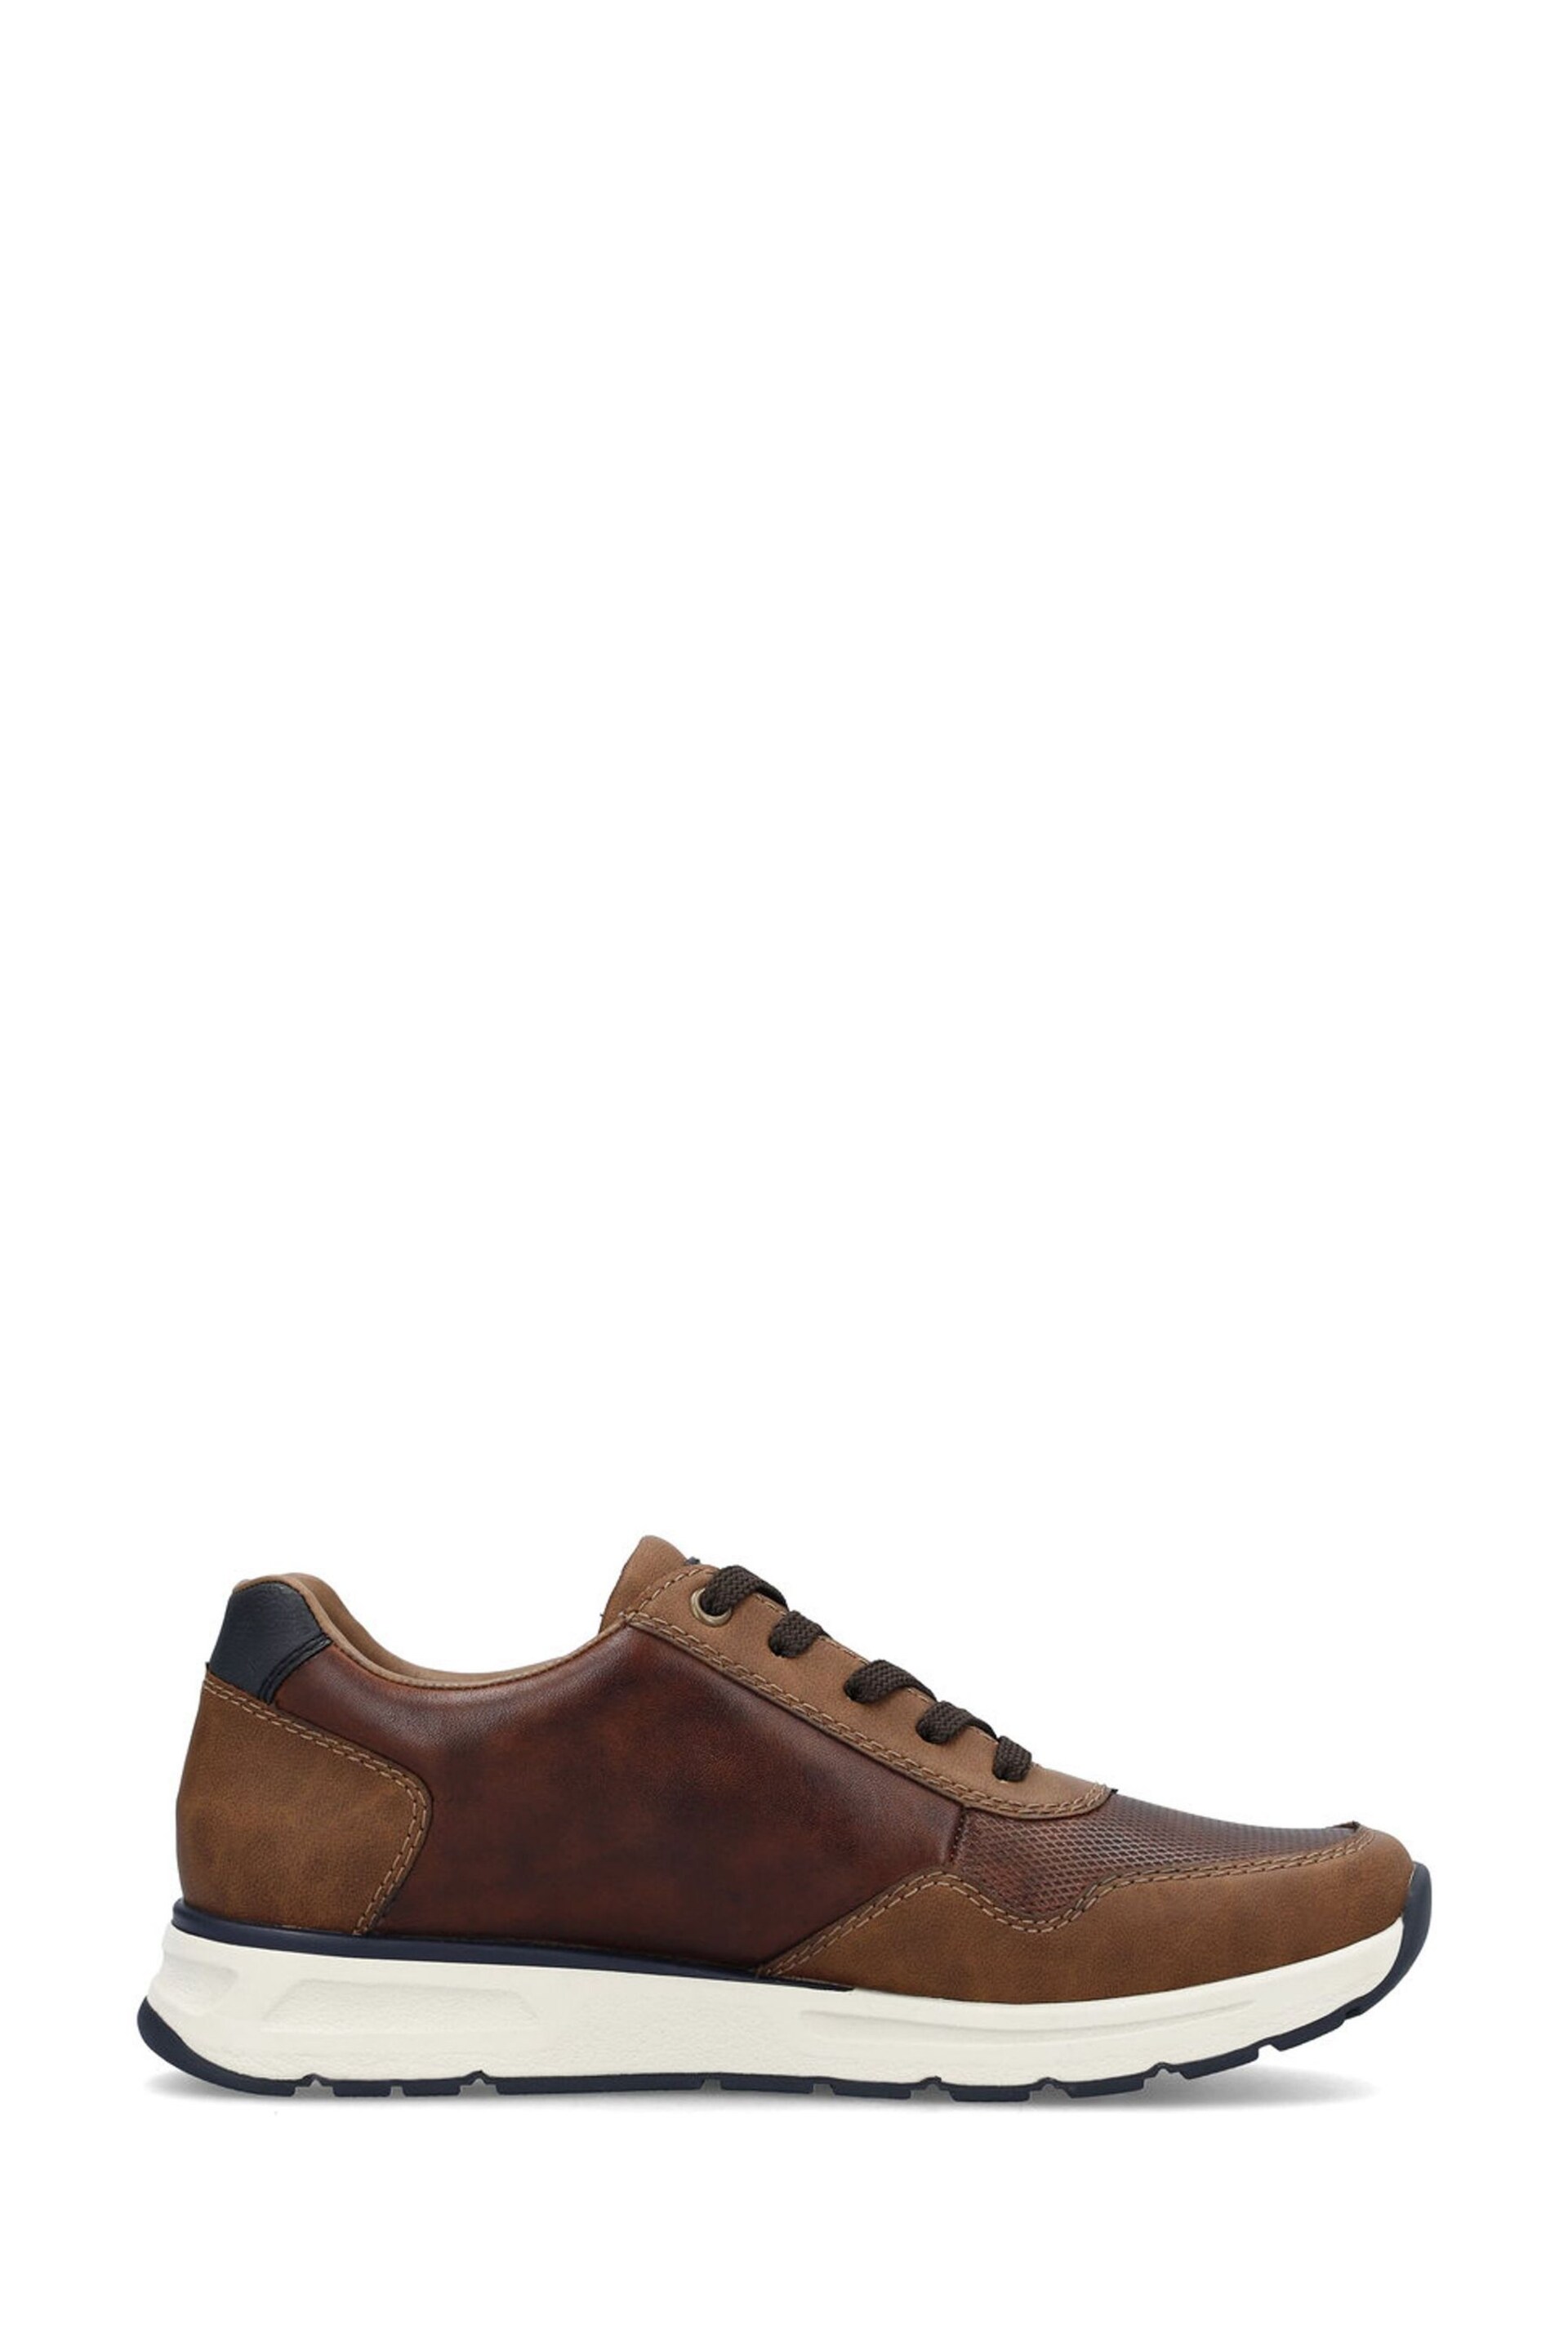 Rieker Mens Zipper Brown Shoes - Image 1 of 9